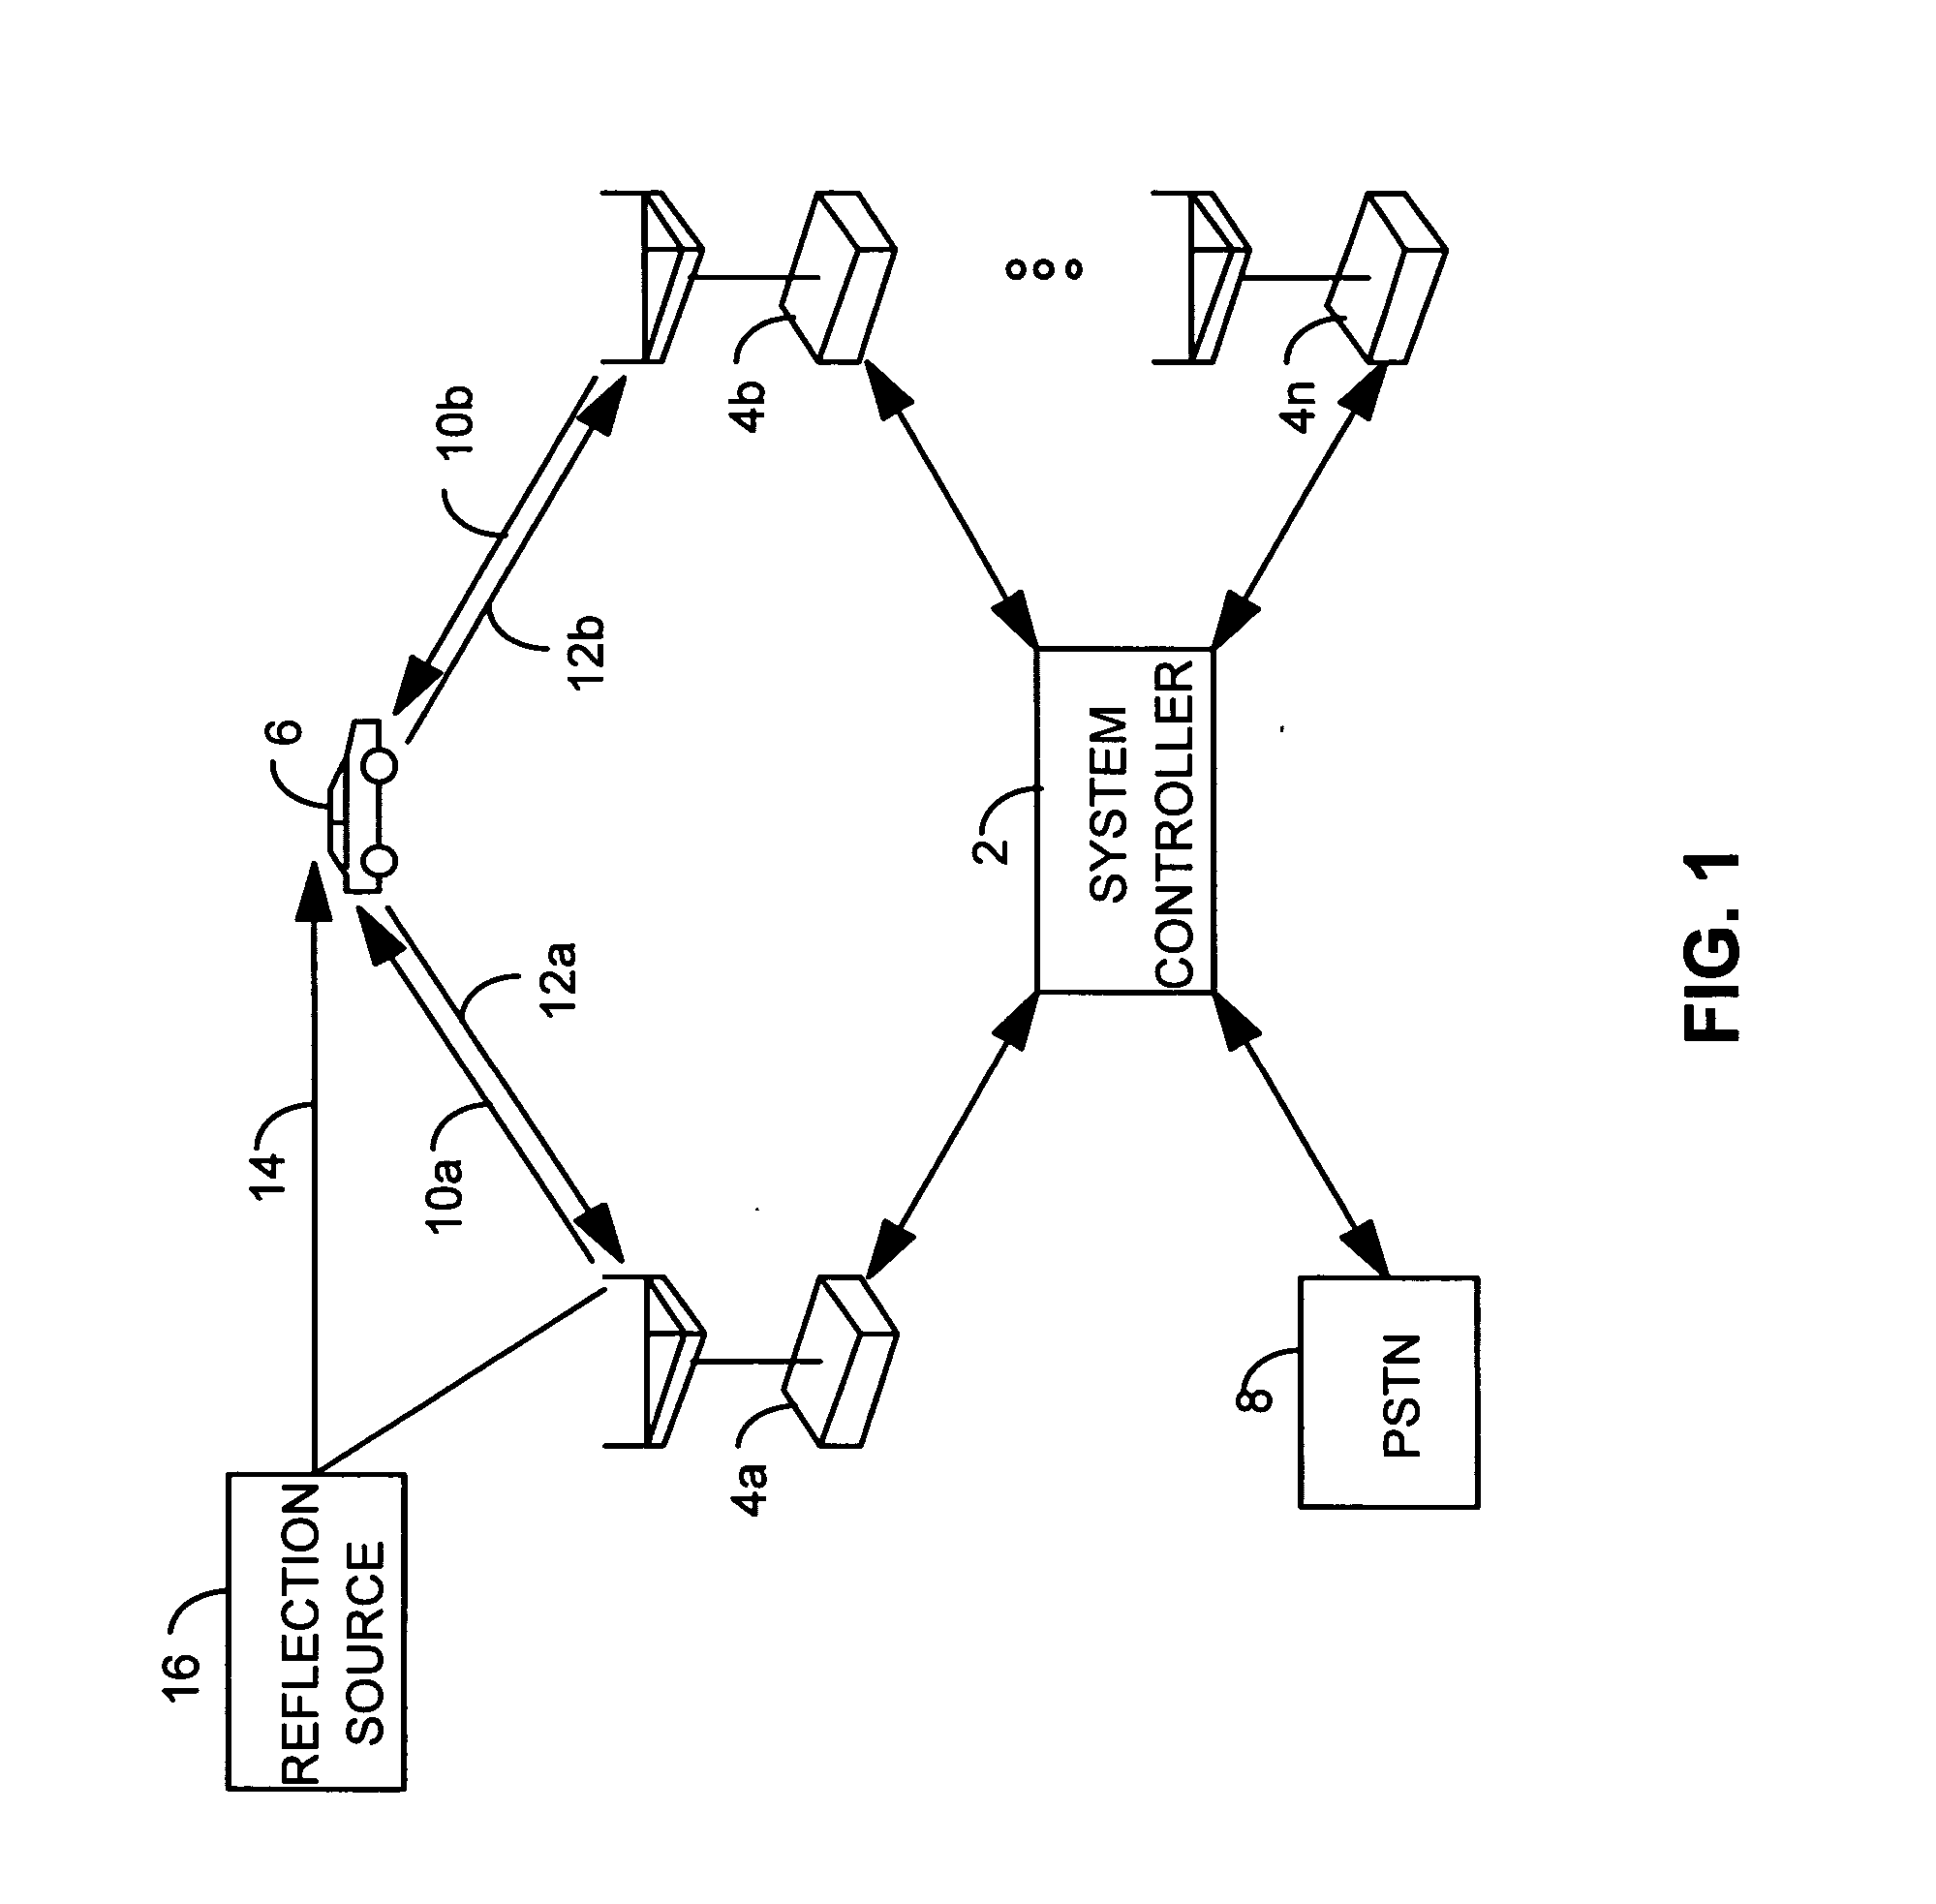 Method and apparatus for time efficient retransmission using symbol accumulation